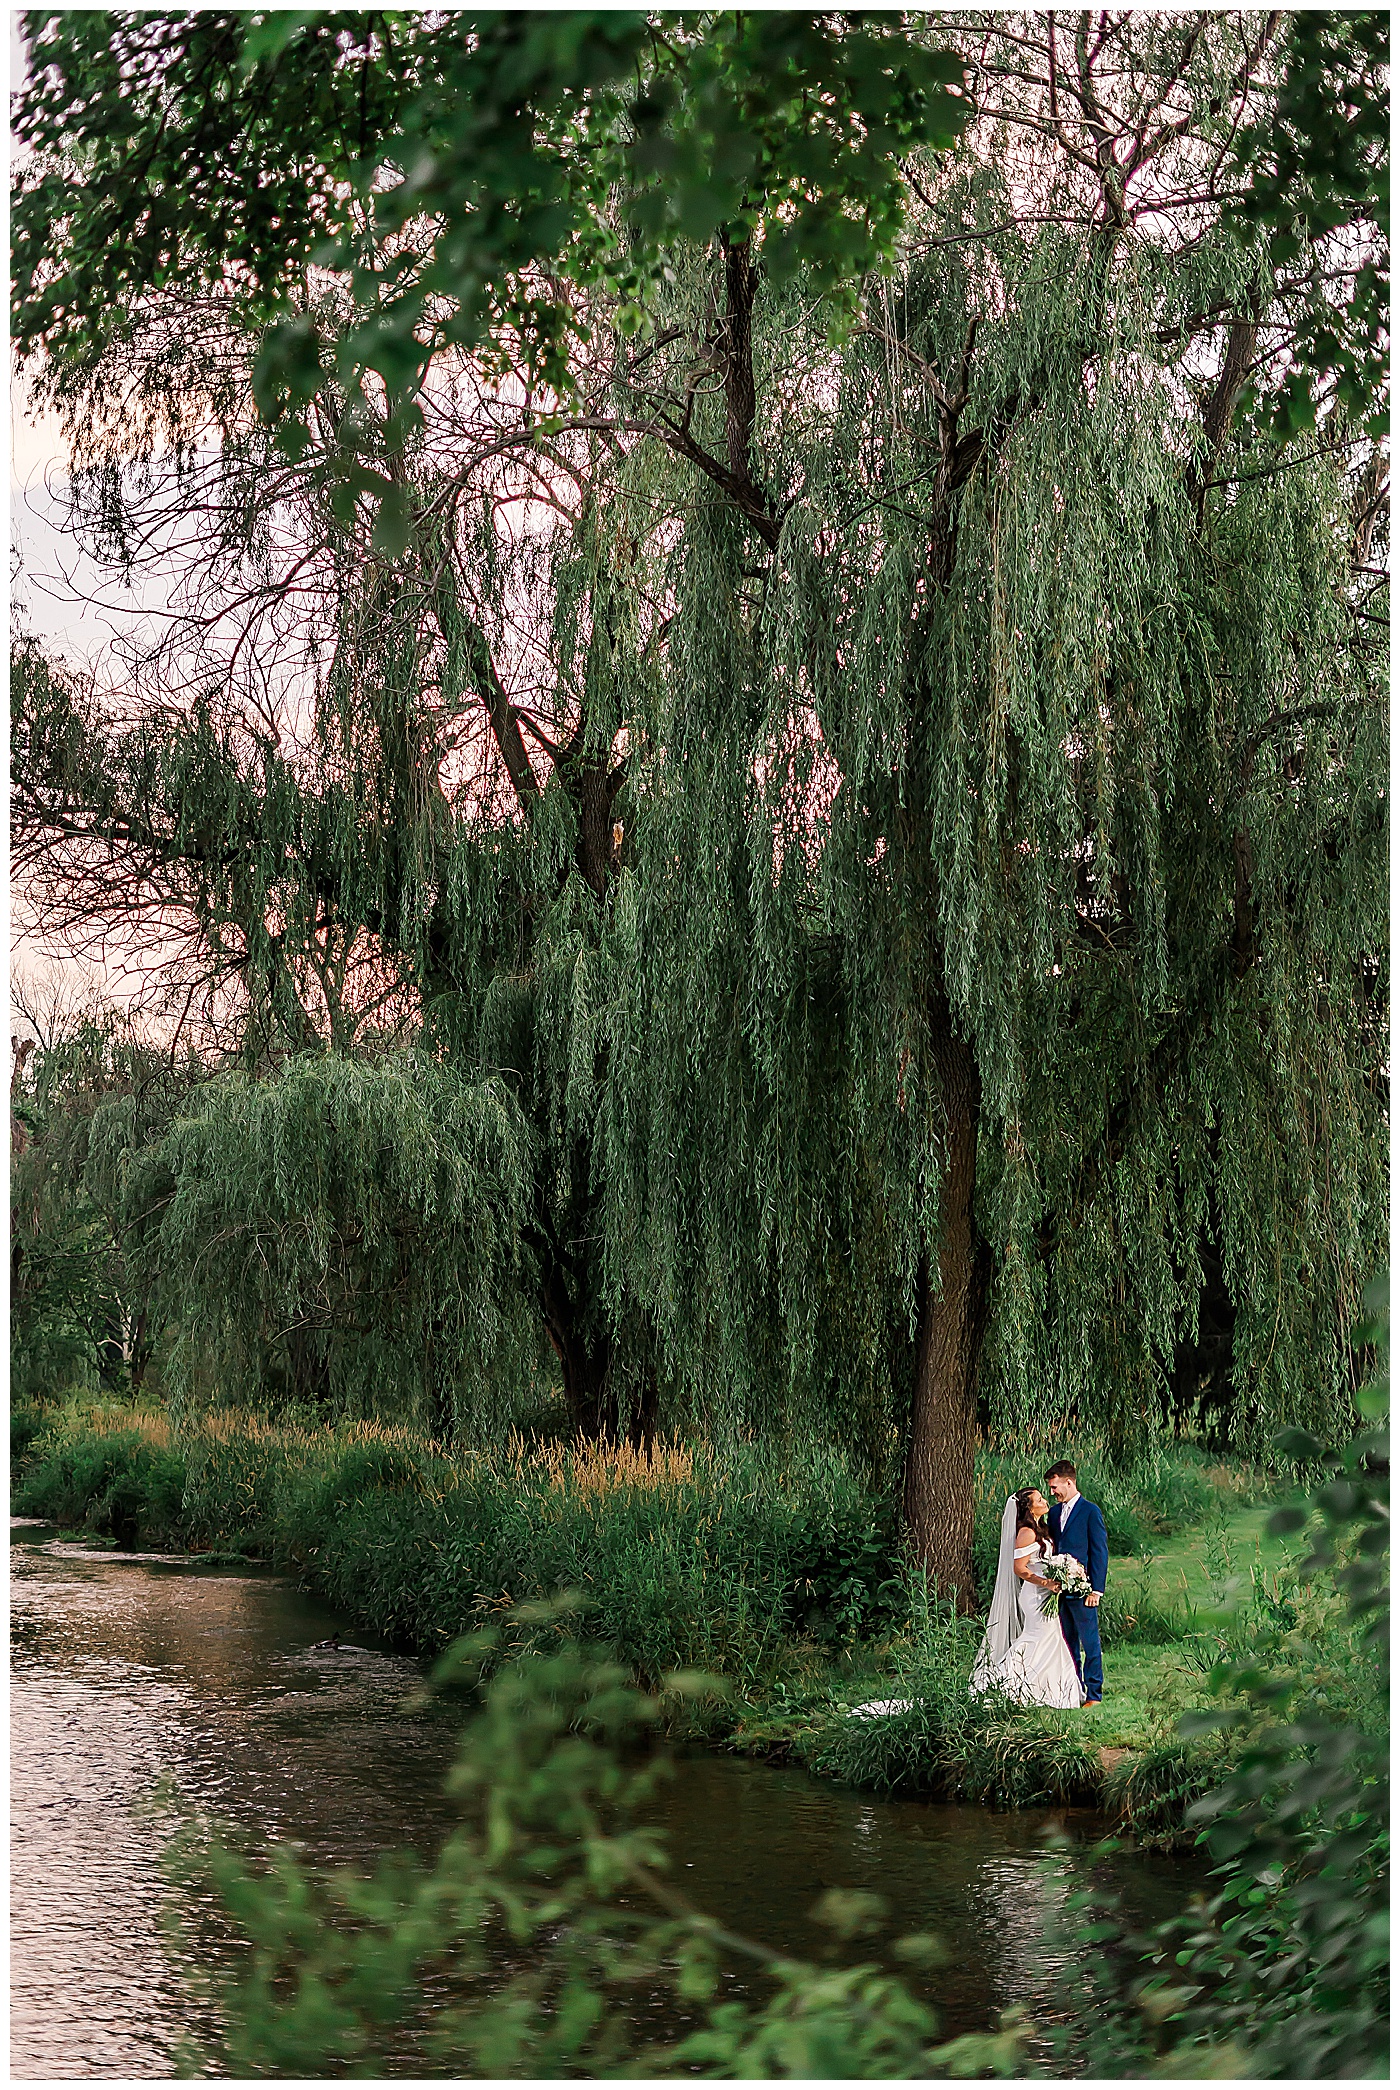 Allentown Rose Gardens Bride and Groom Willow Tree